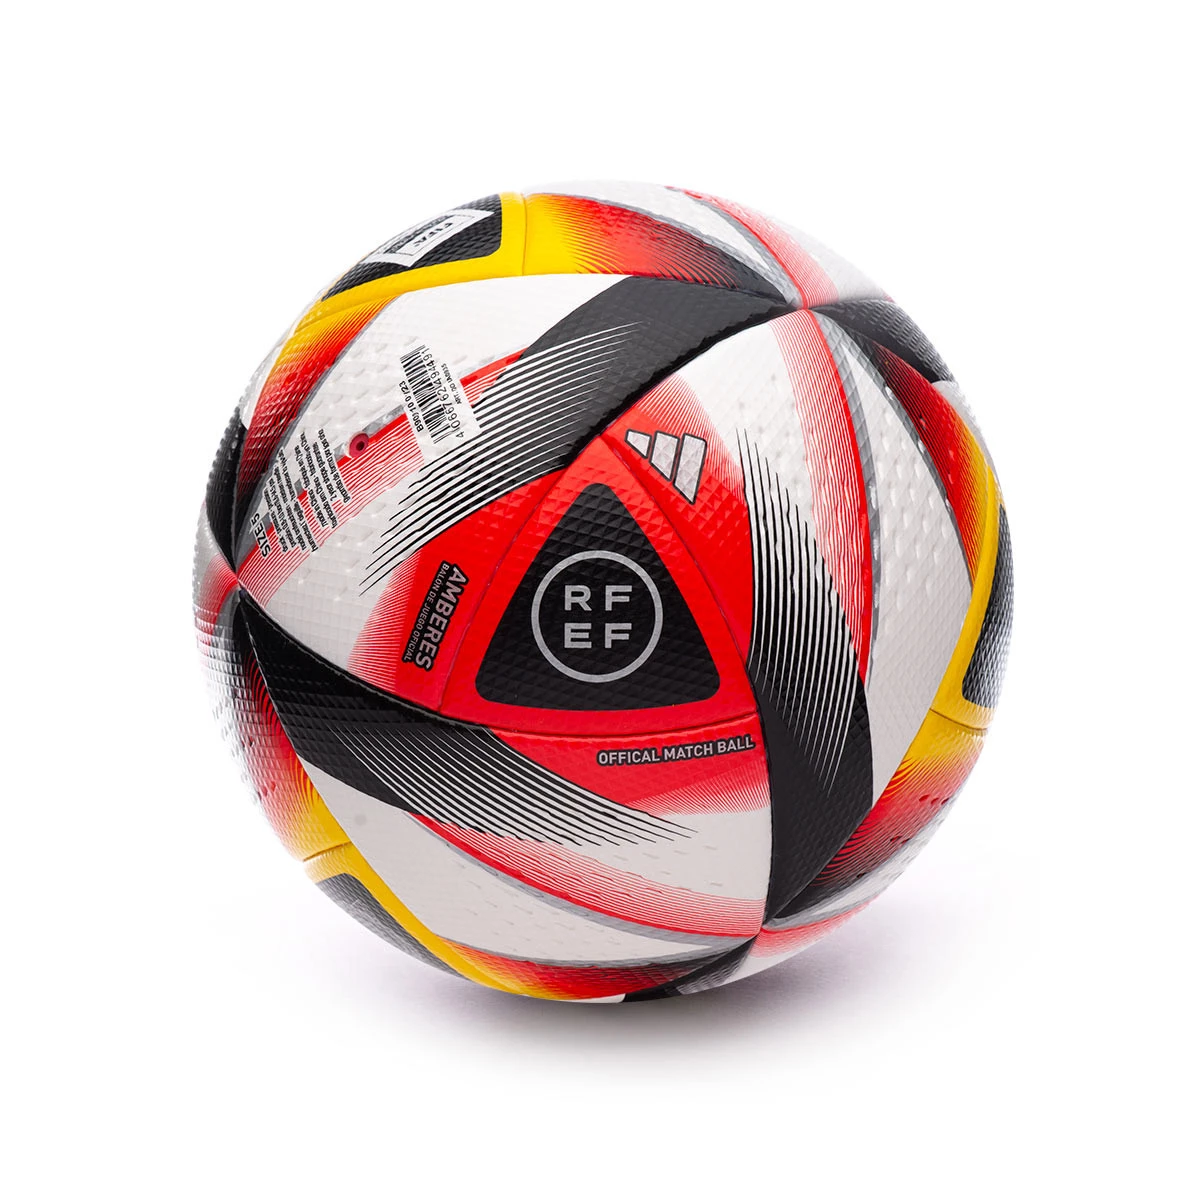 Balonesfdelmundo on X: Balón Adidas. Real Madrid. España #Balonesdelmundo  #Balonessefutbol #Futbol #Soccer #Soccerball #Balones #Balls #Realmadrid  #España #Spain #Adidas #Adidasball #Deportes #Sports   / X